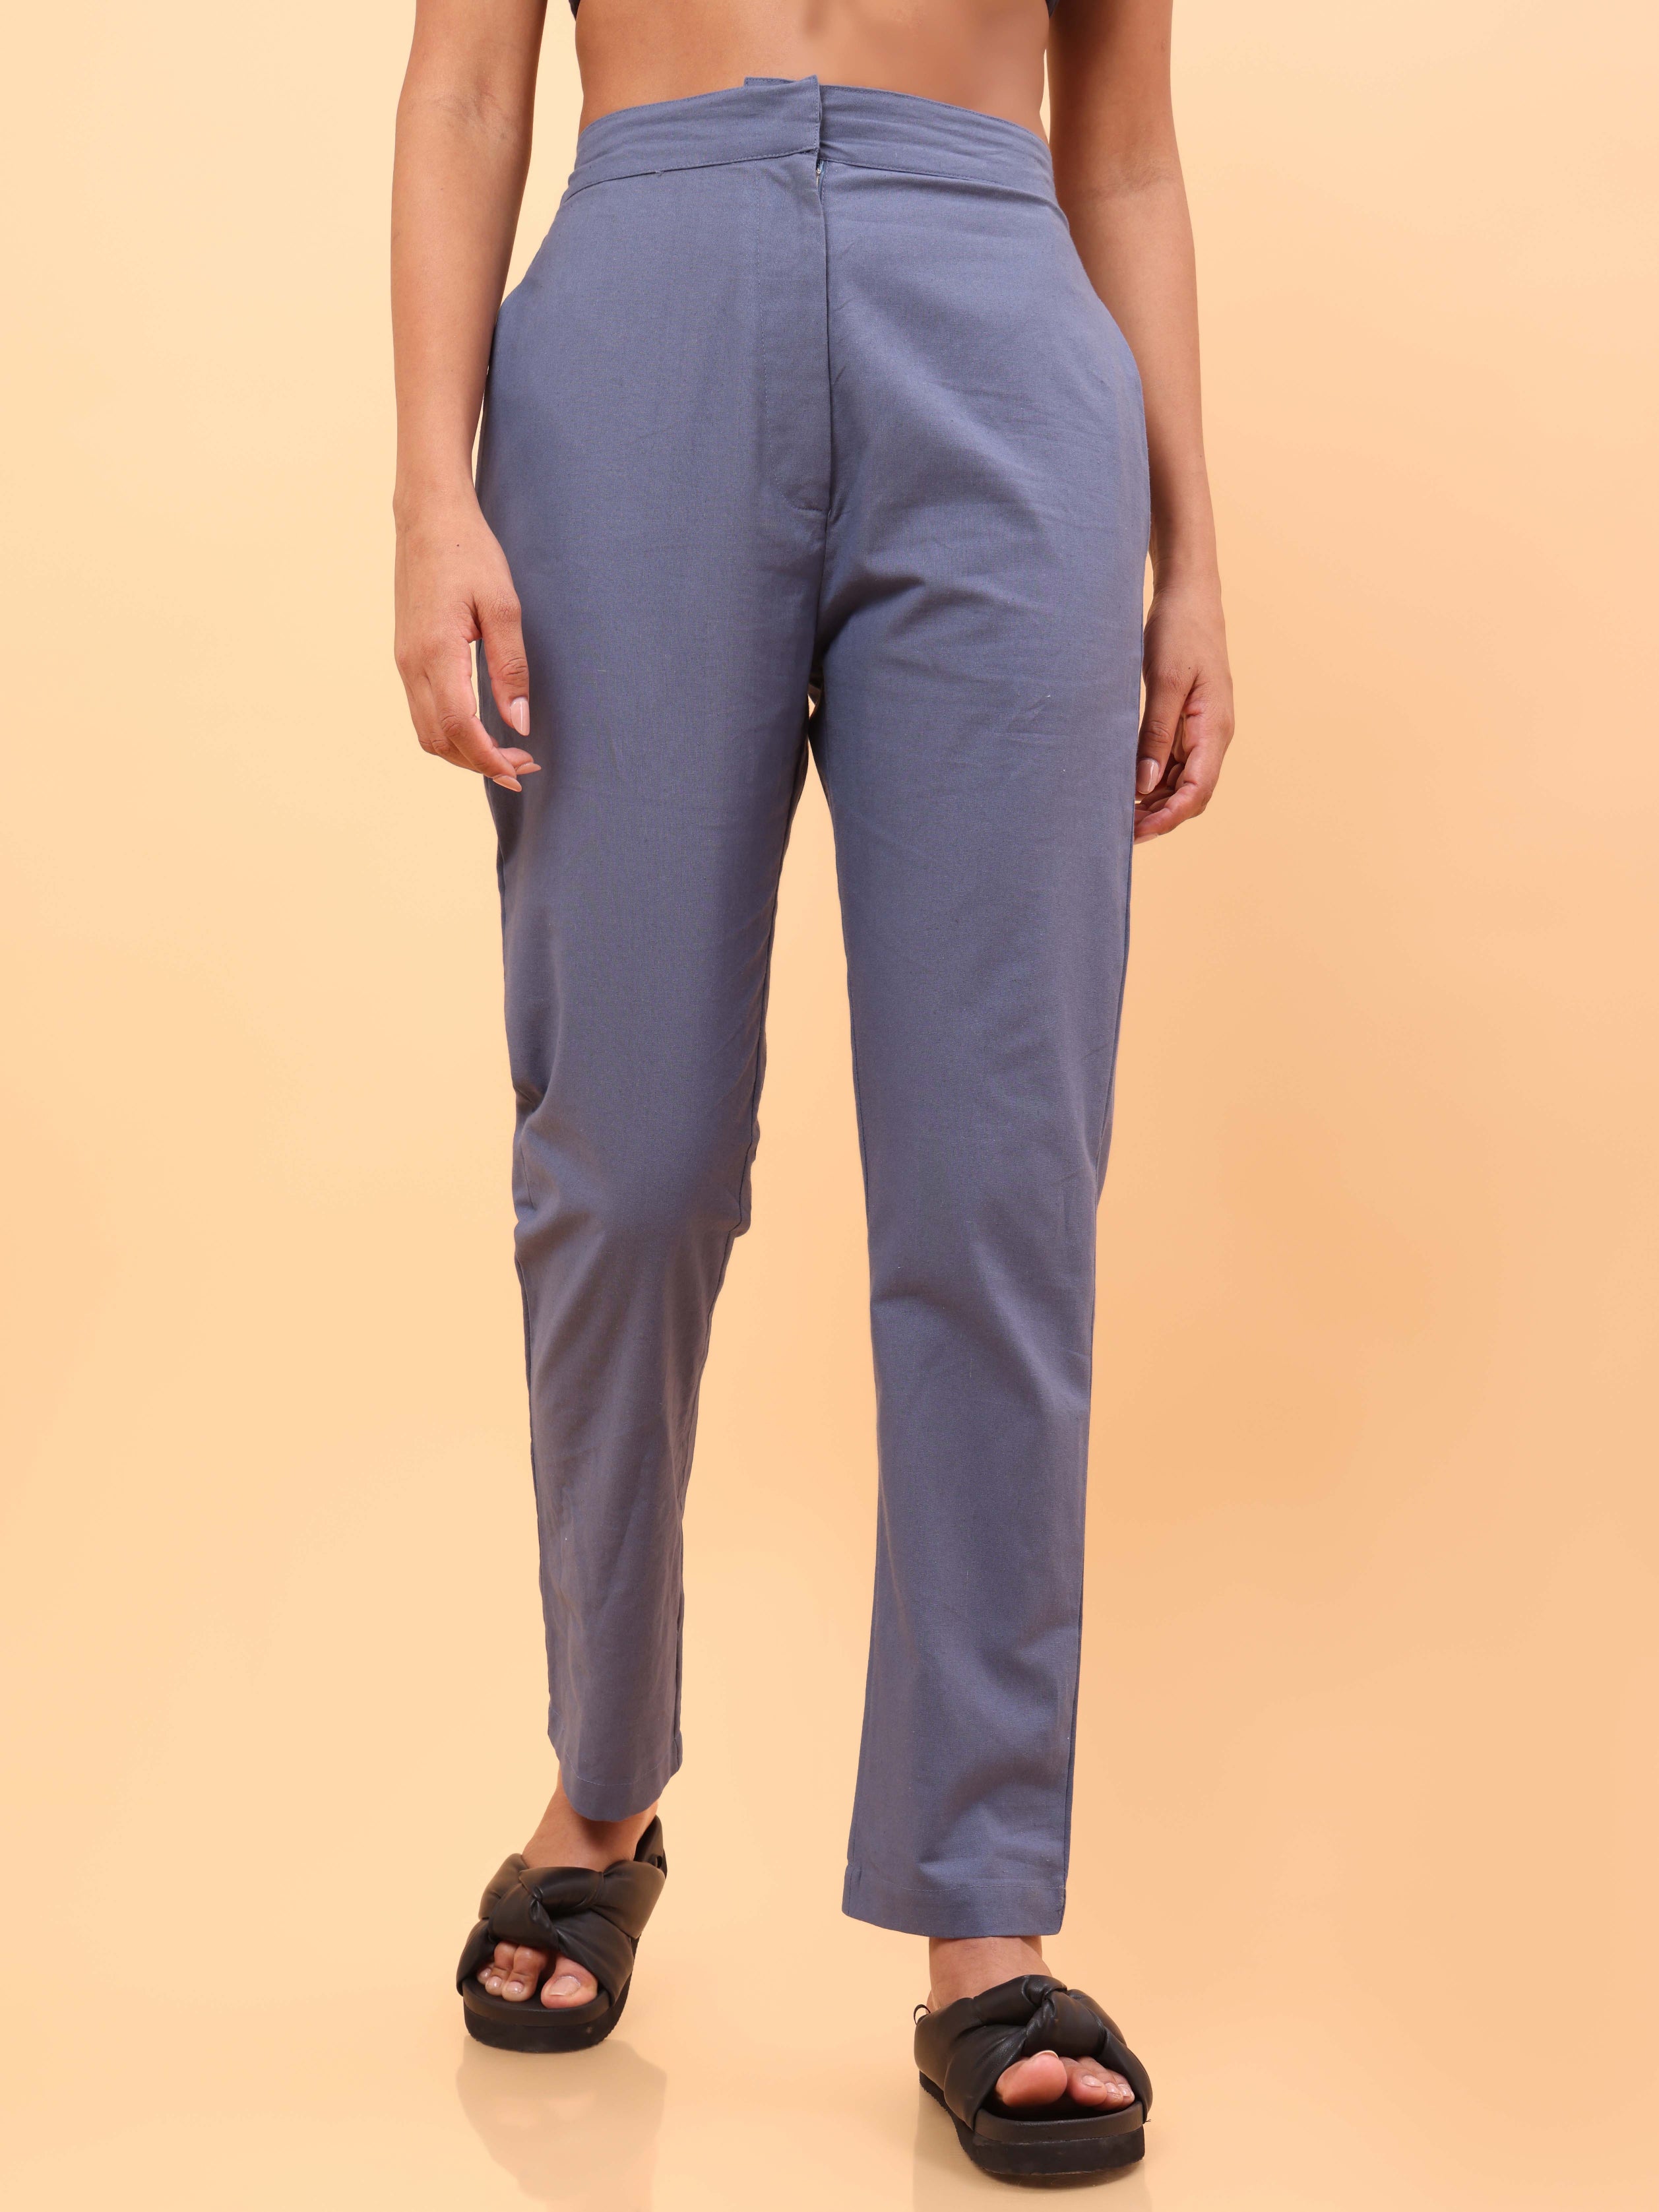 Bright Blue Tailored Pants – FARM Rio